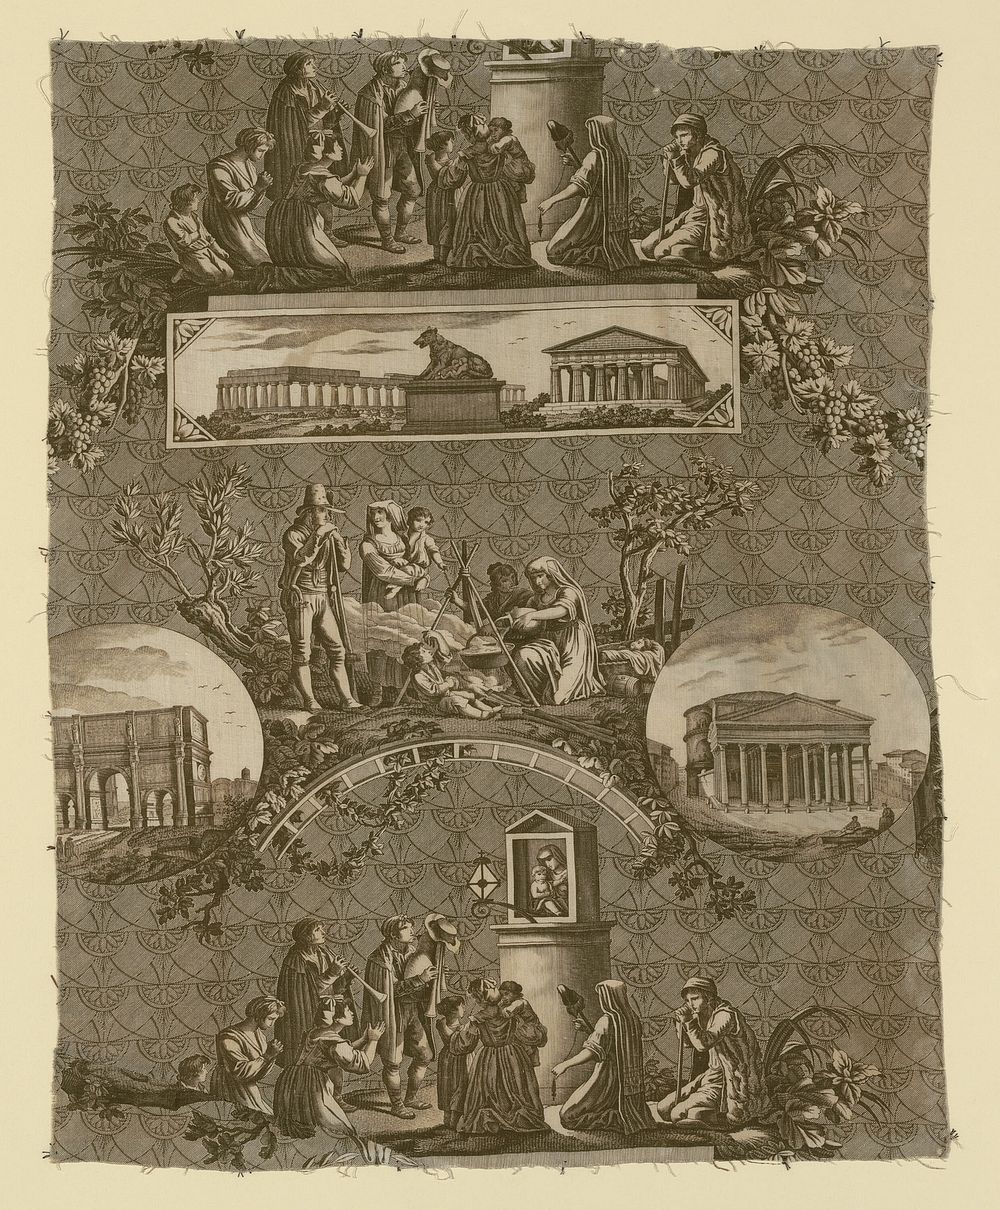 Le Romain (The Roman) (Furnishing Fabric) by Jean Baptiste Huet (Designer)